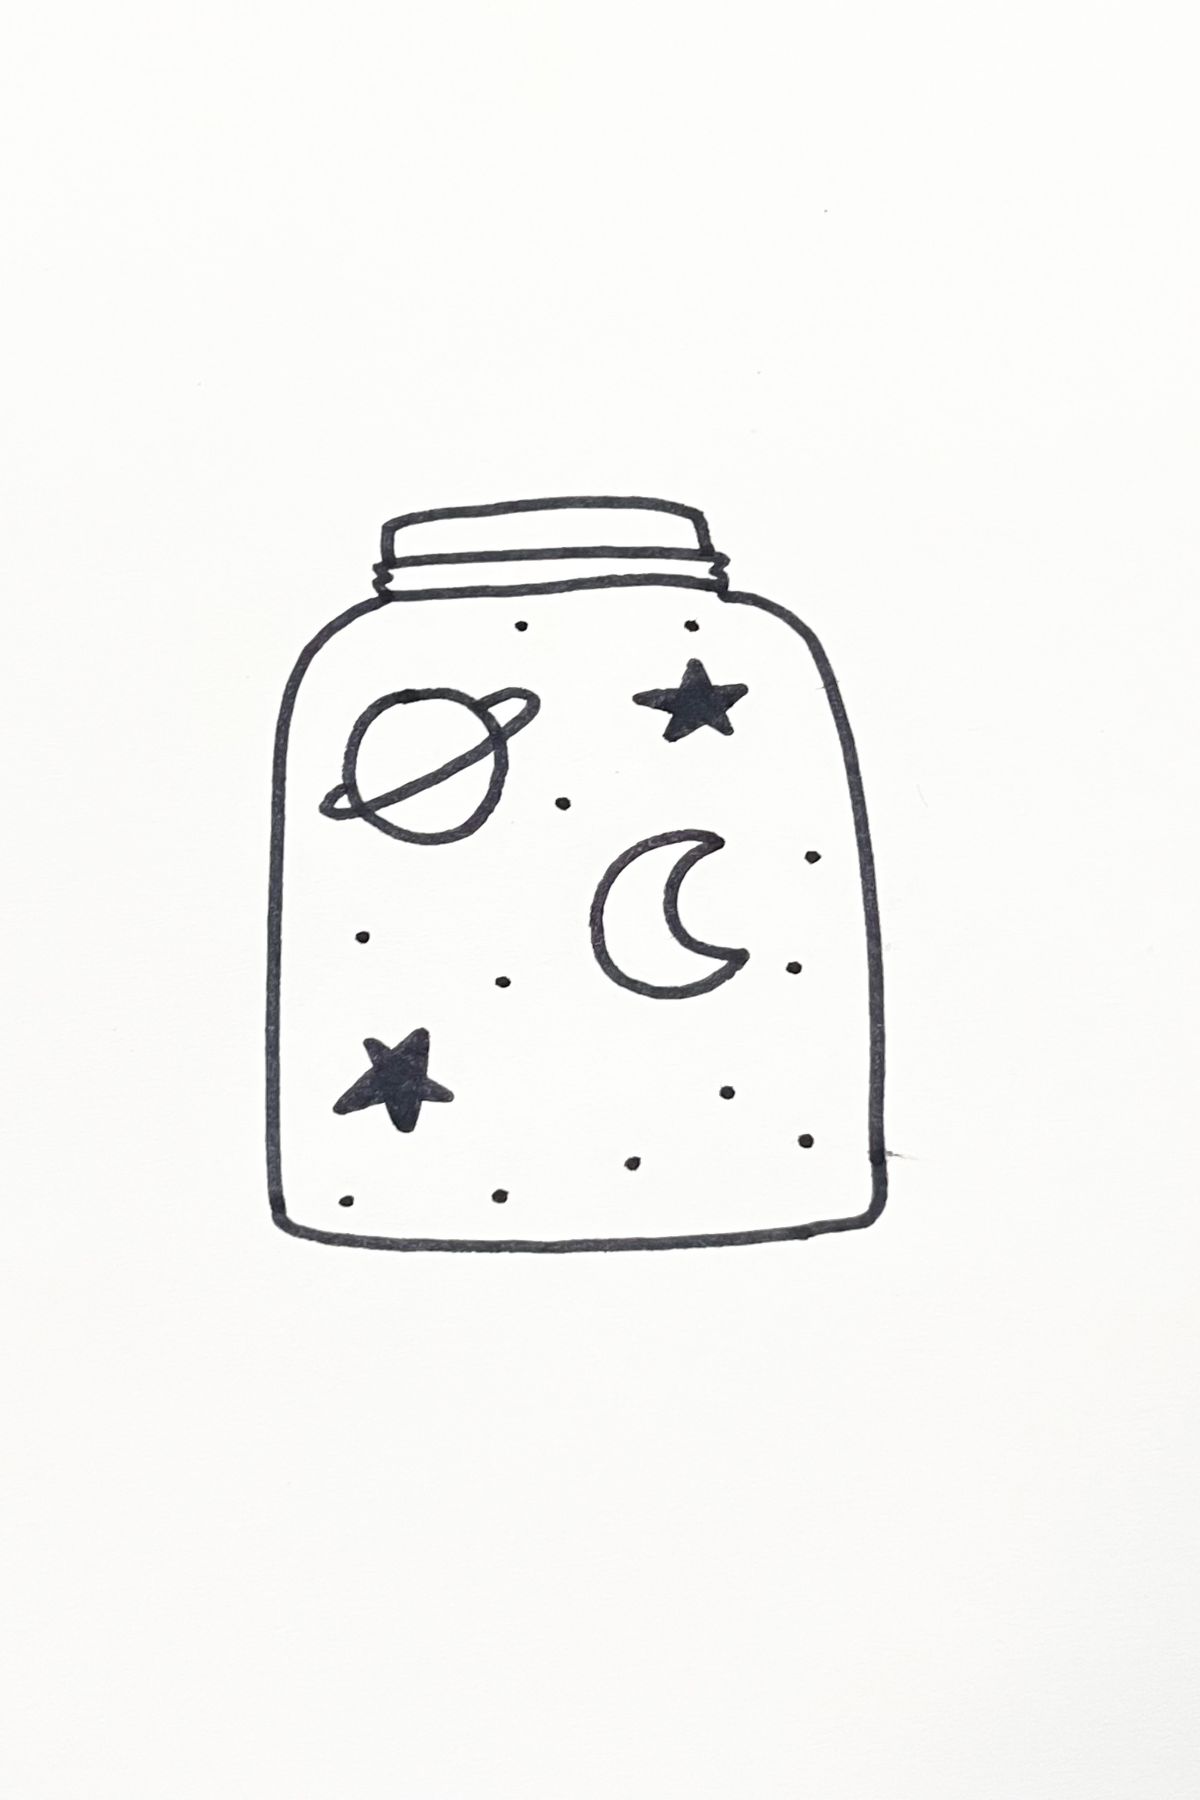 universe in a jar drawing idea